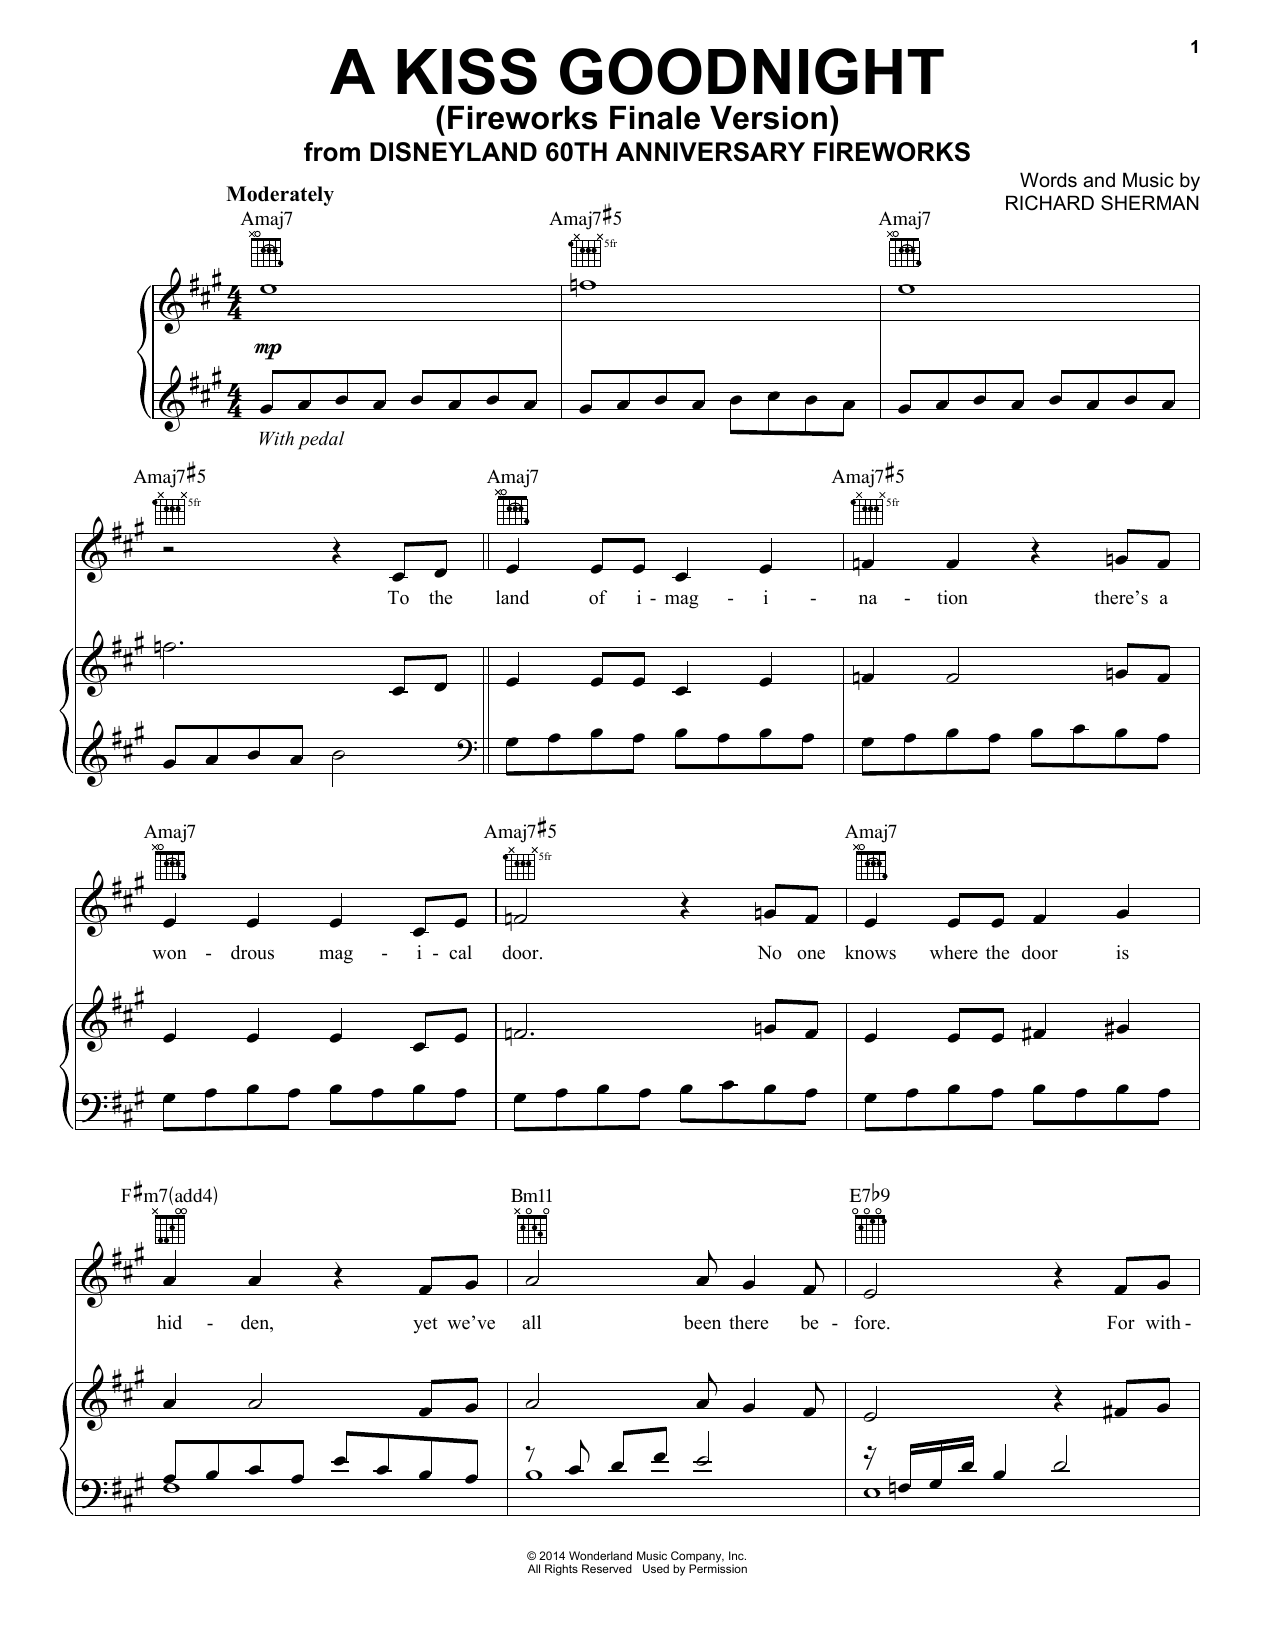 Download Richard Sherman A Kiss Goodnight Sheet Music